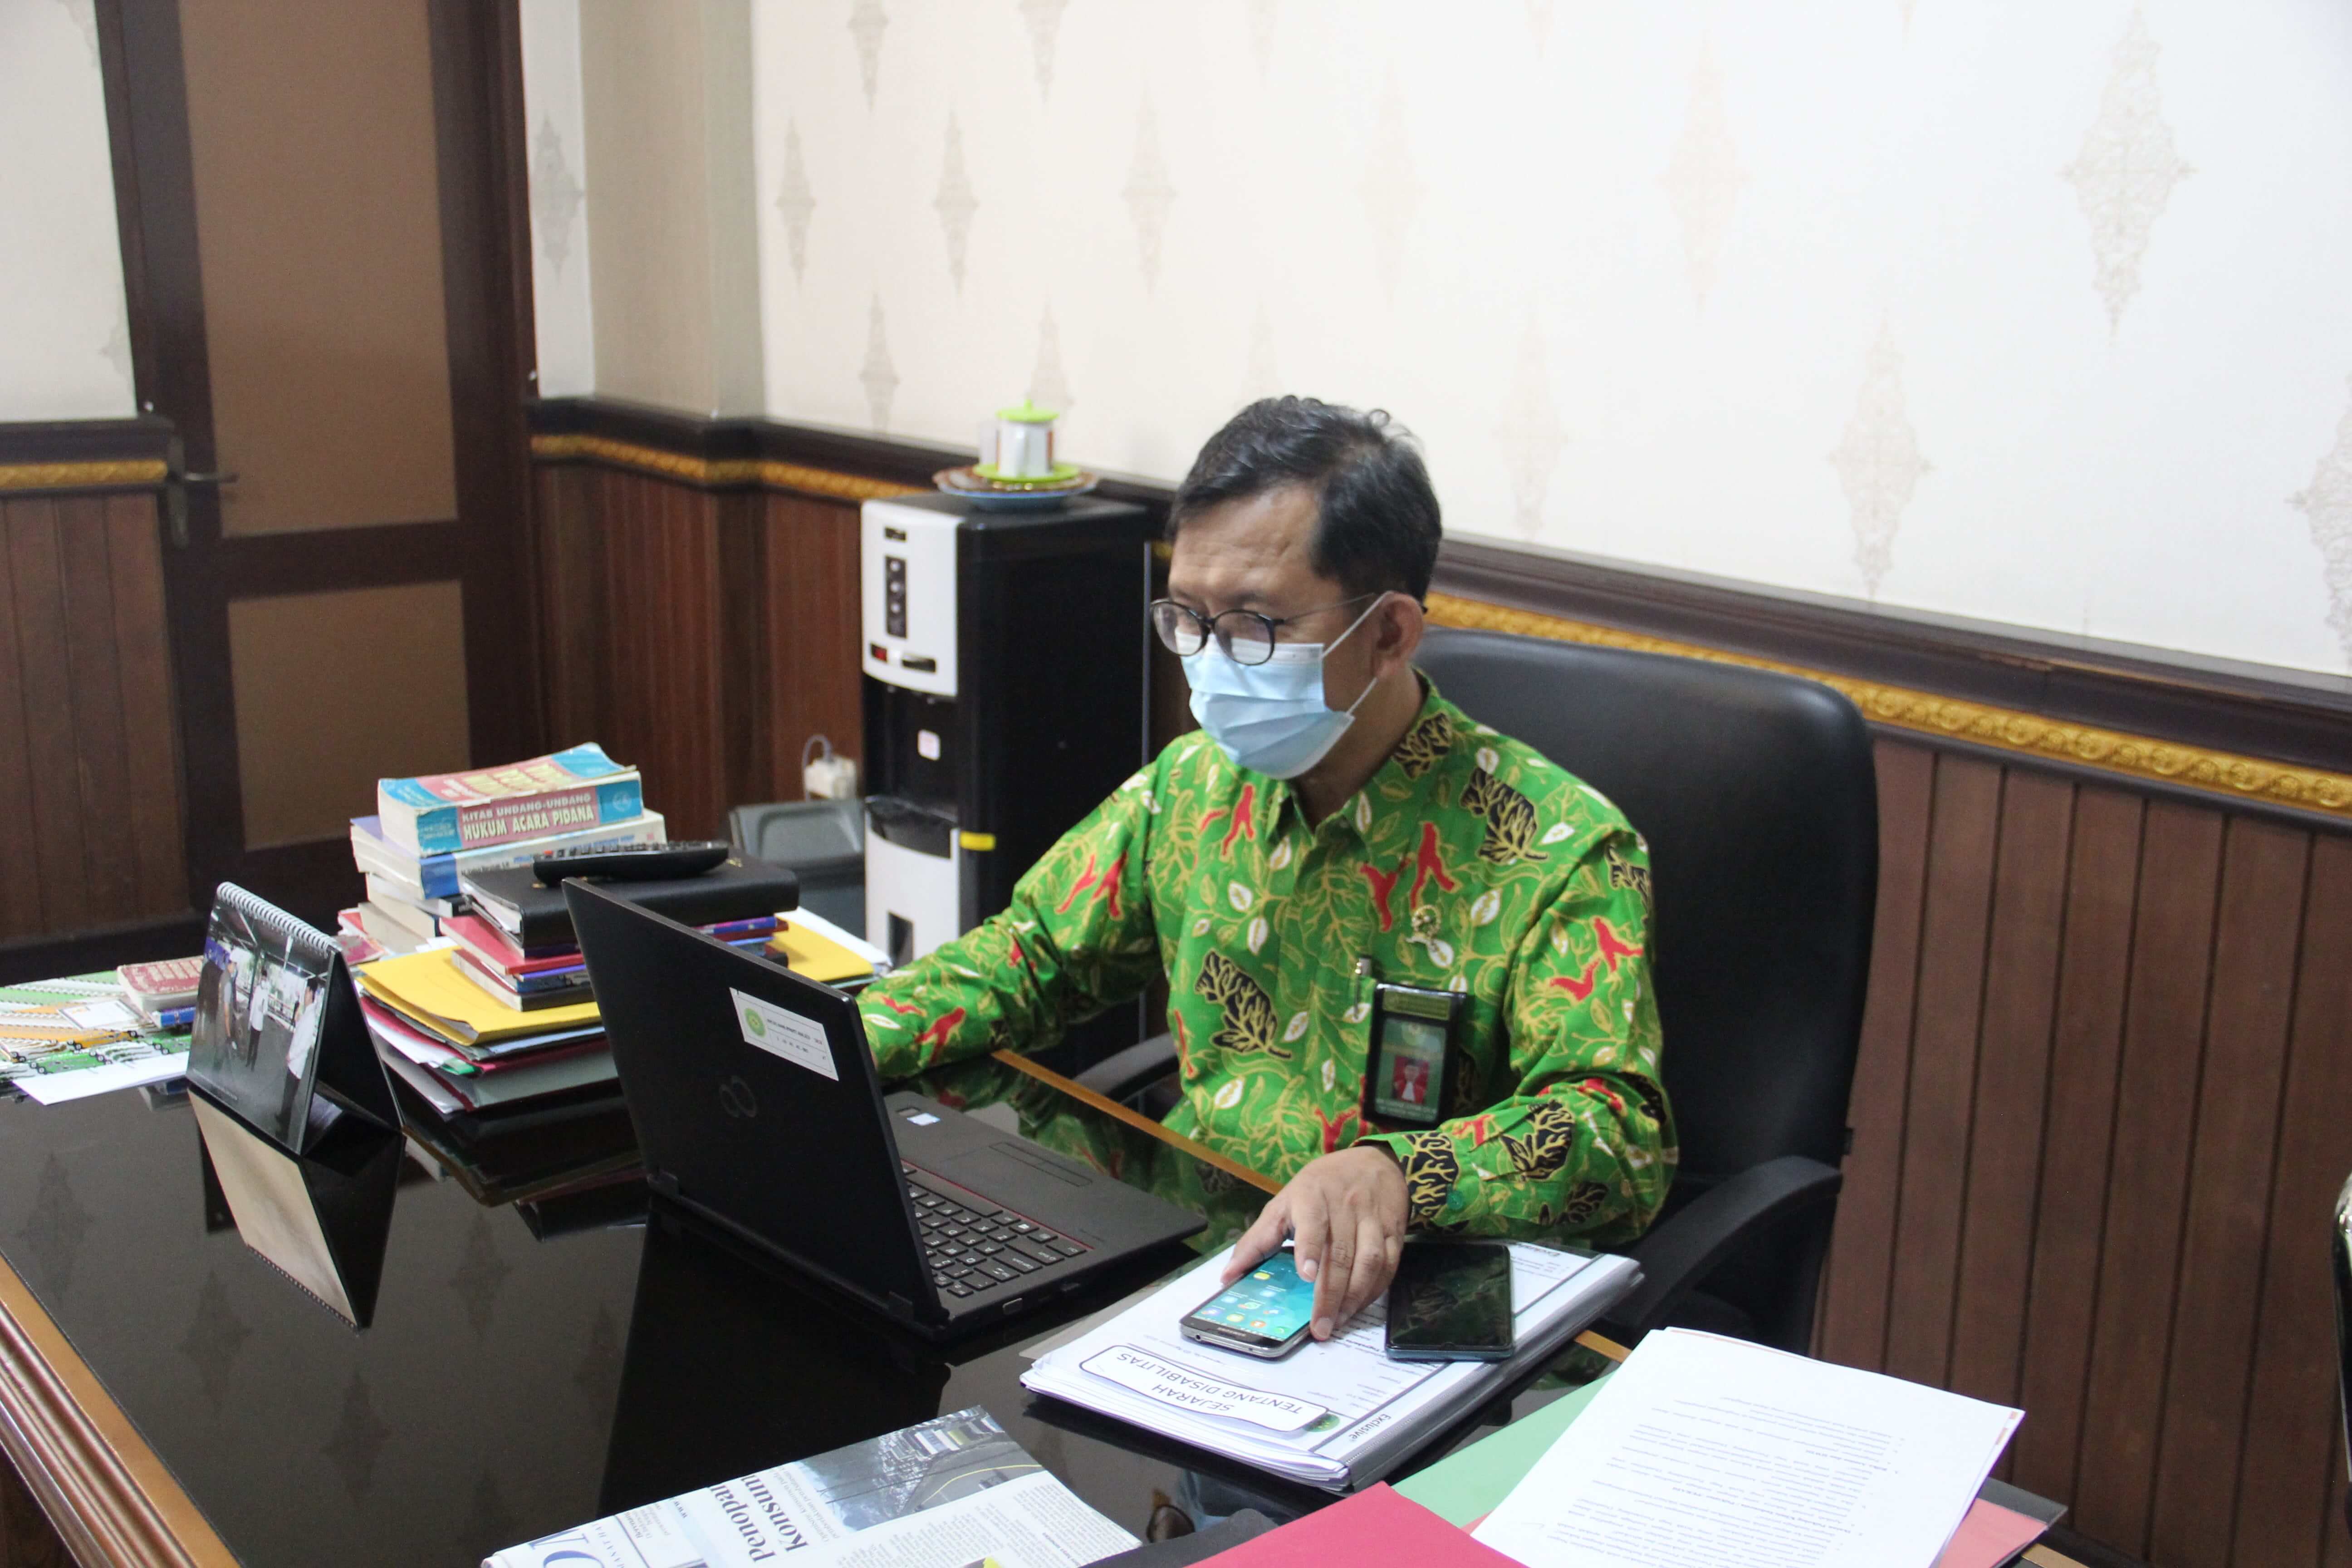 Wakil Pengadilan Negeri Yogyakarta Mengikuti Workshop Implementasi PERMA 3 2017 di Pengadilan dan Pendampingan 3 Profesi Terhadap Perempuan dan Anak Disabilitas Berhadapan dengan Hukum